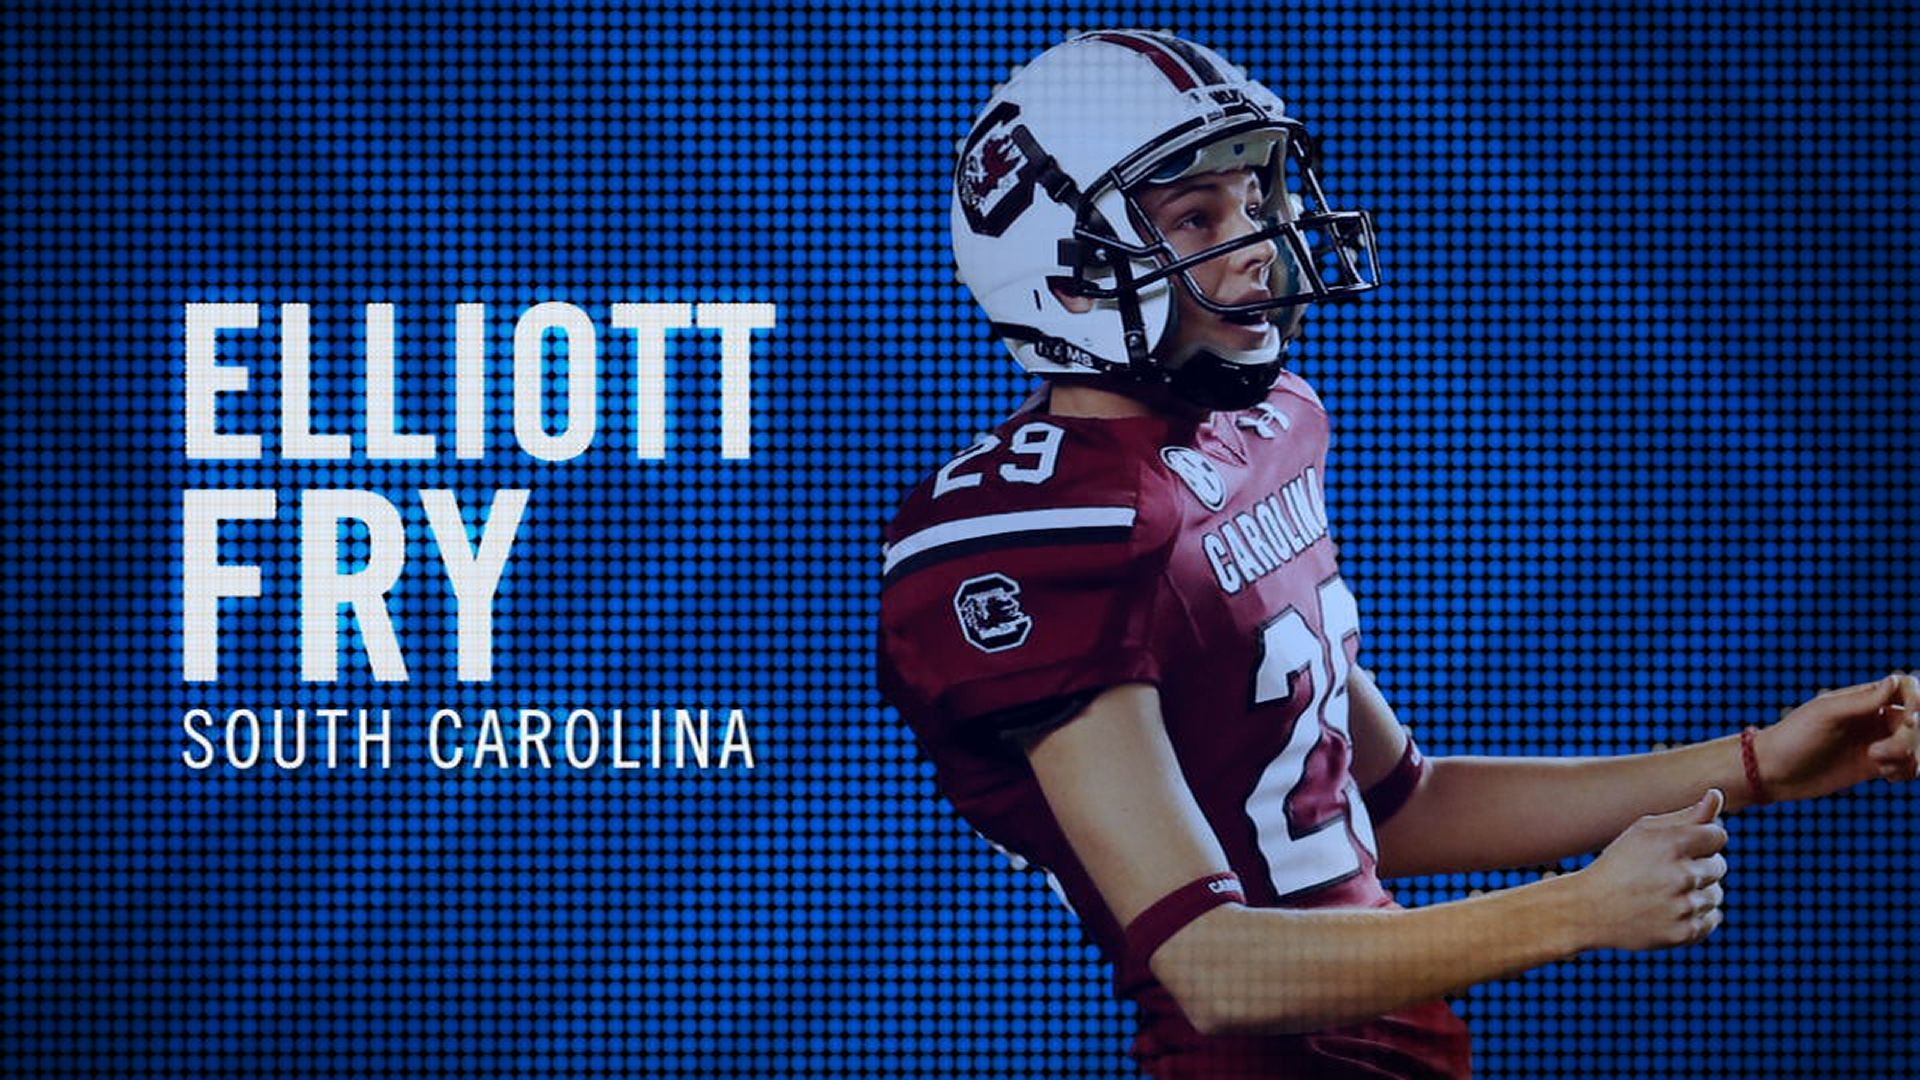 I am the SEC: South Carolina's Elliott Fry